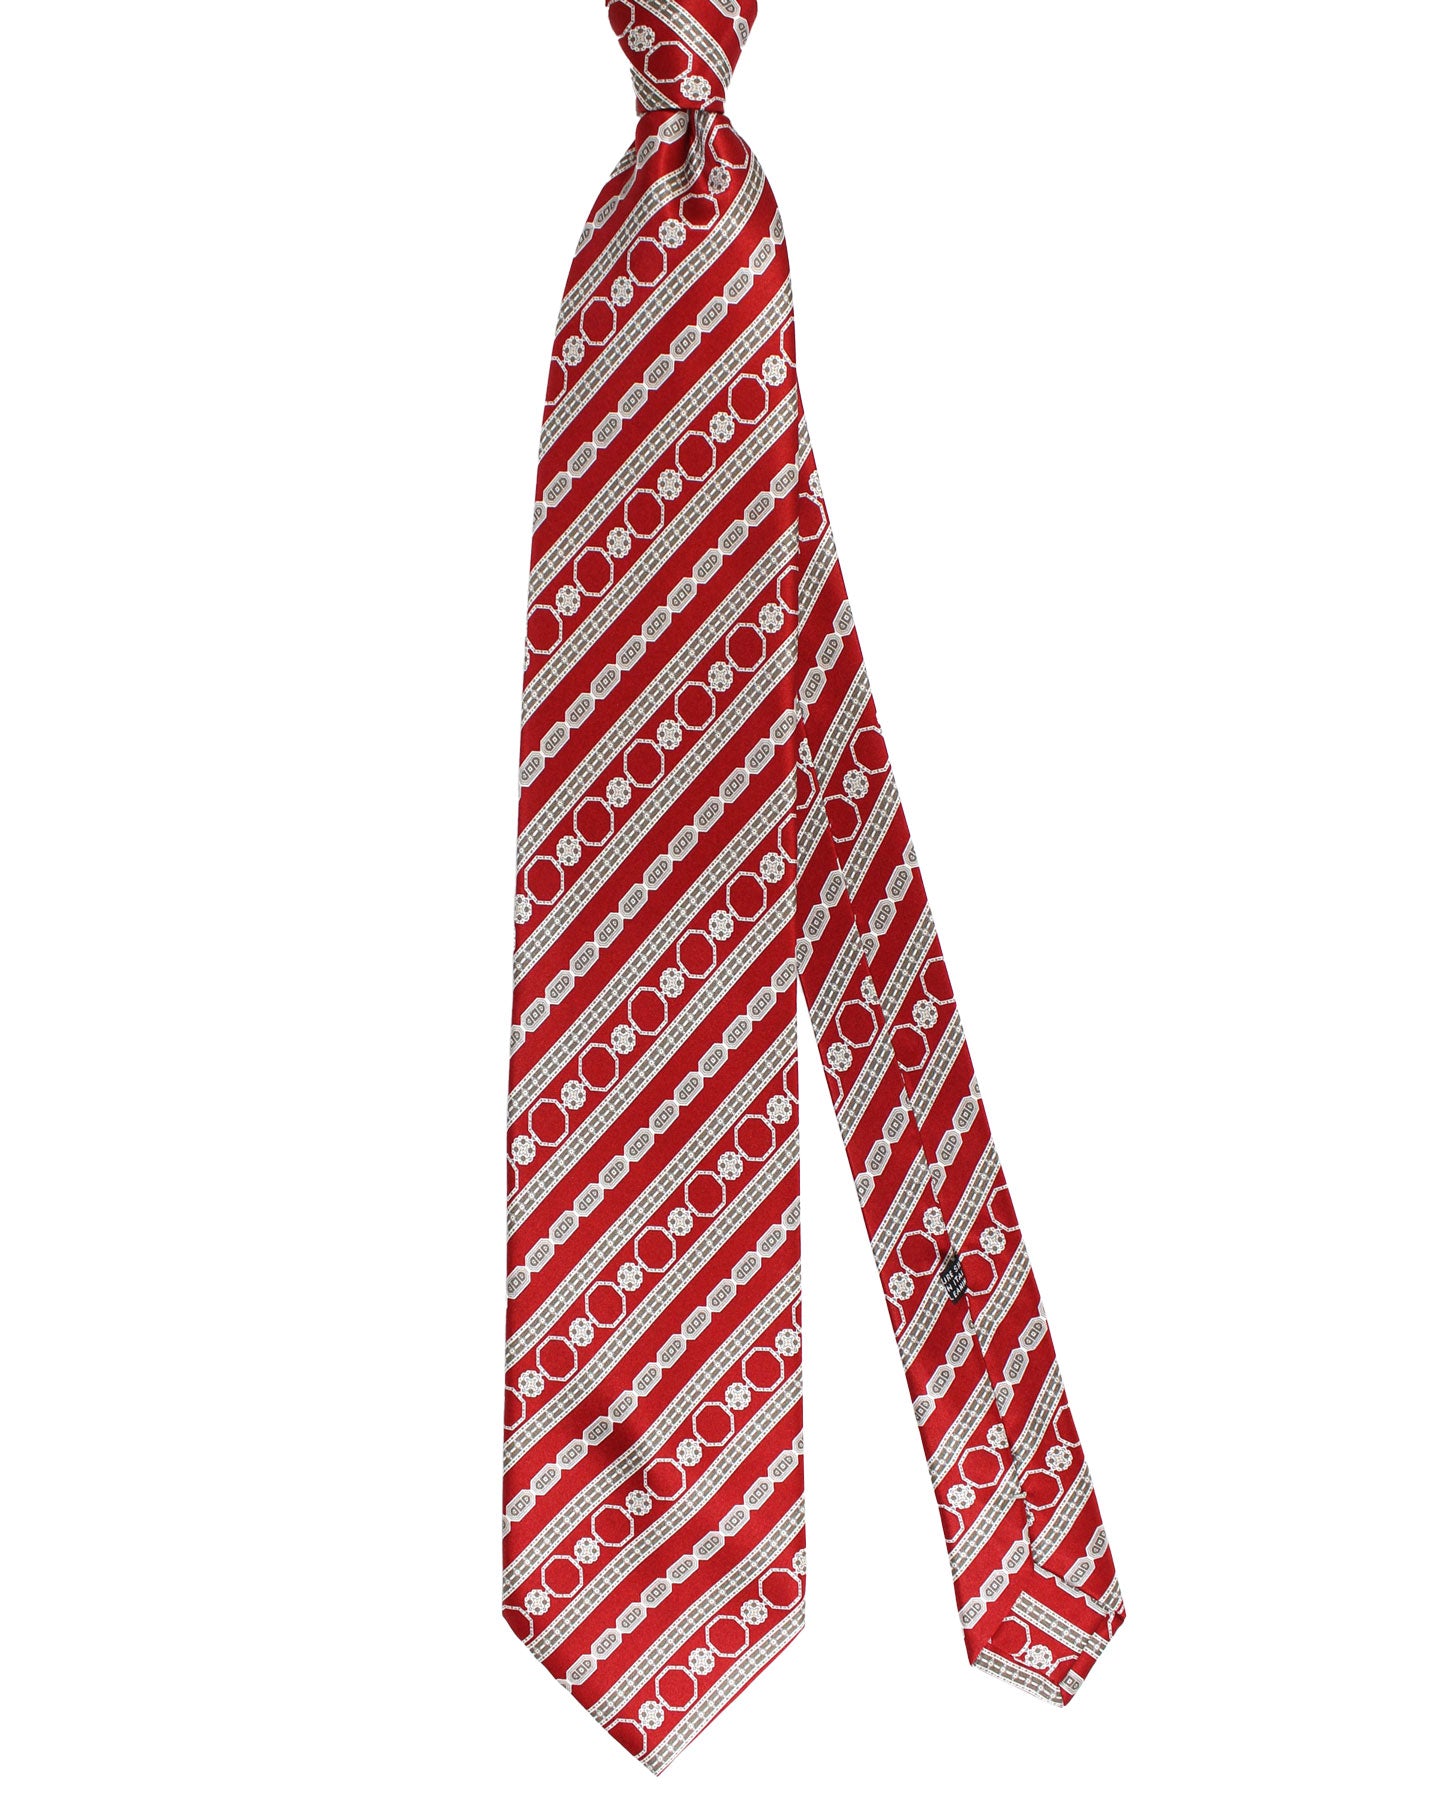 Stefano Ricci Silk Tie Maroon Taupe Silver Stripes